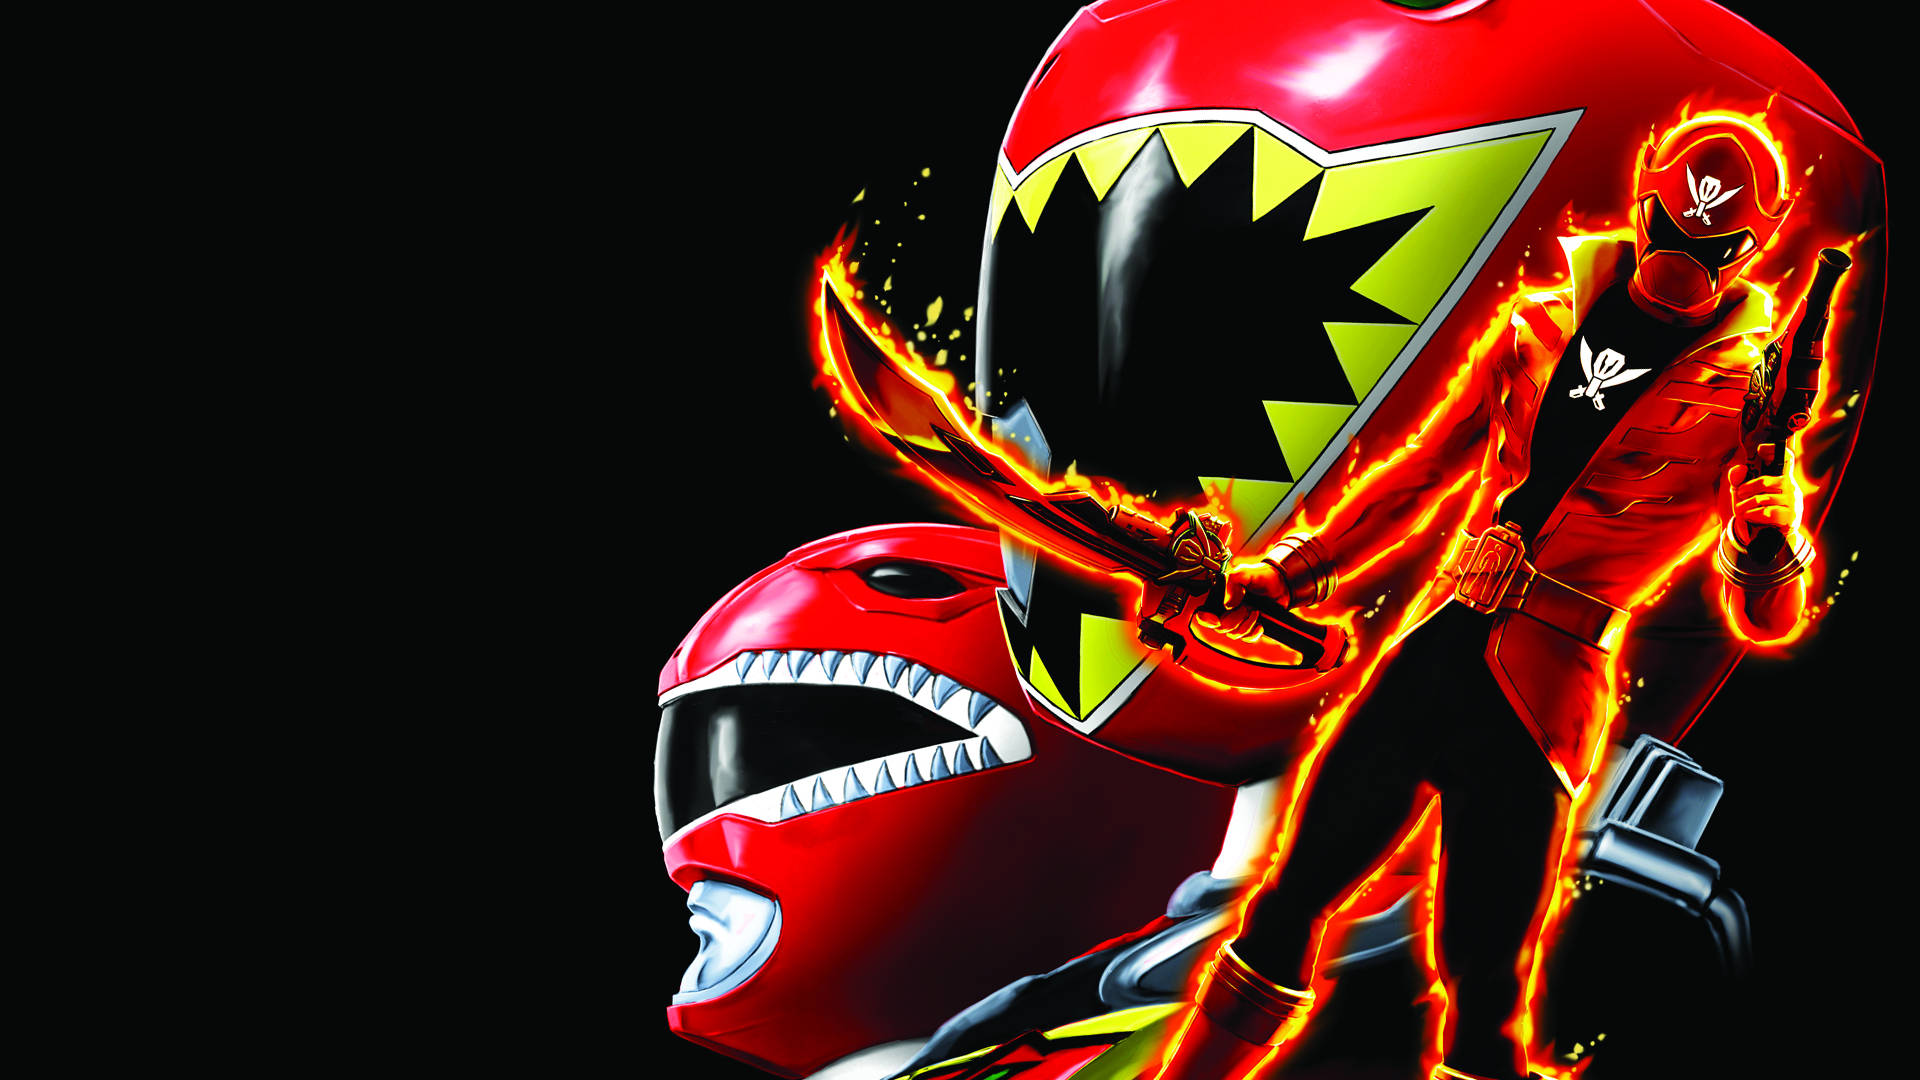 Caption: Red Super Megaforce Power Ranger Action Pose. Wallpaper